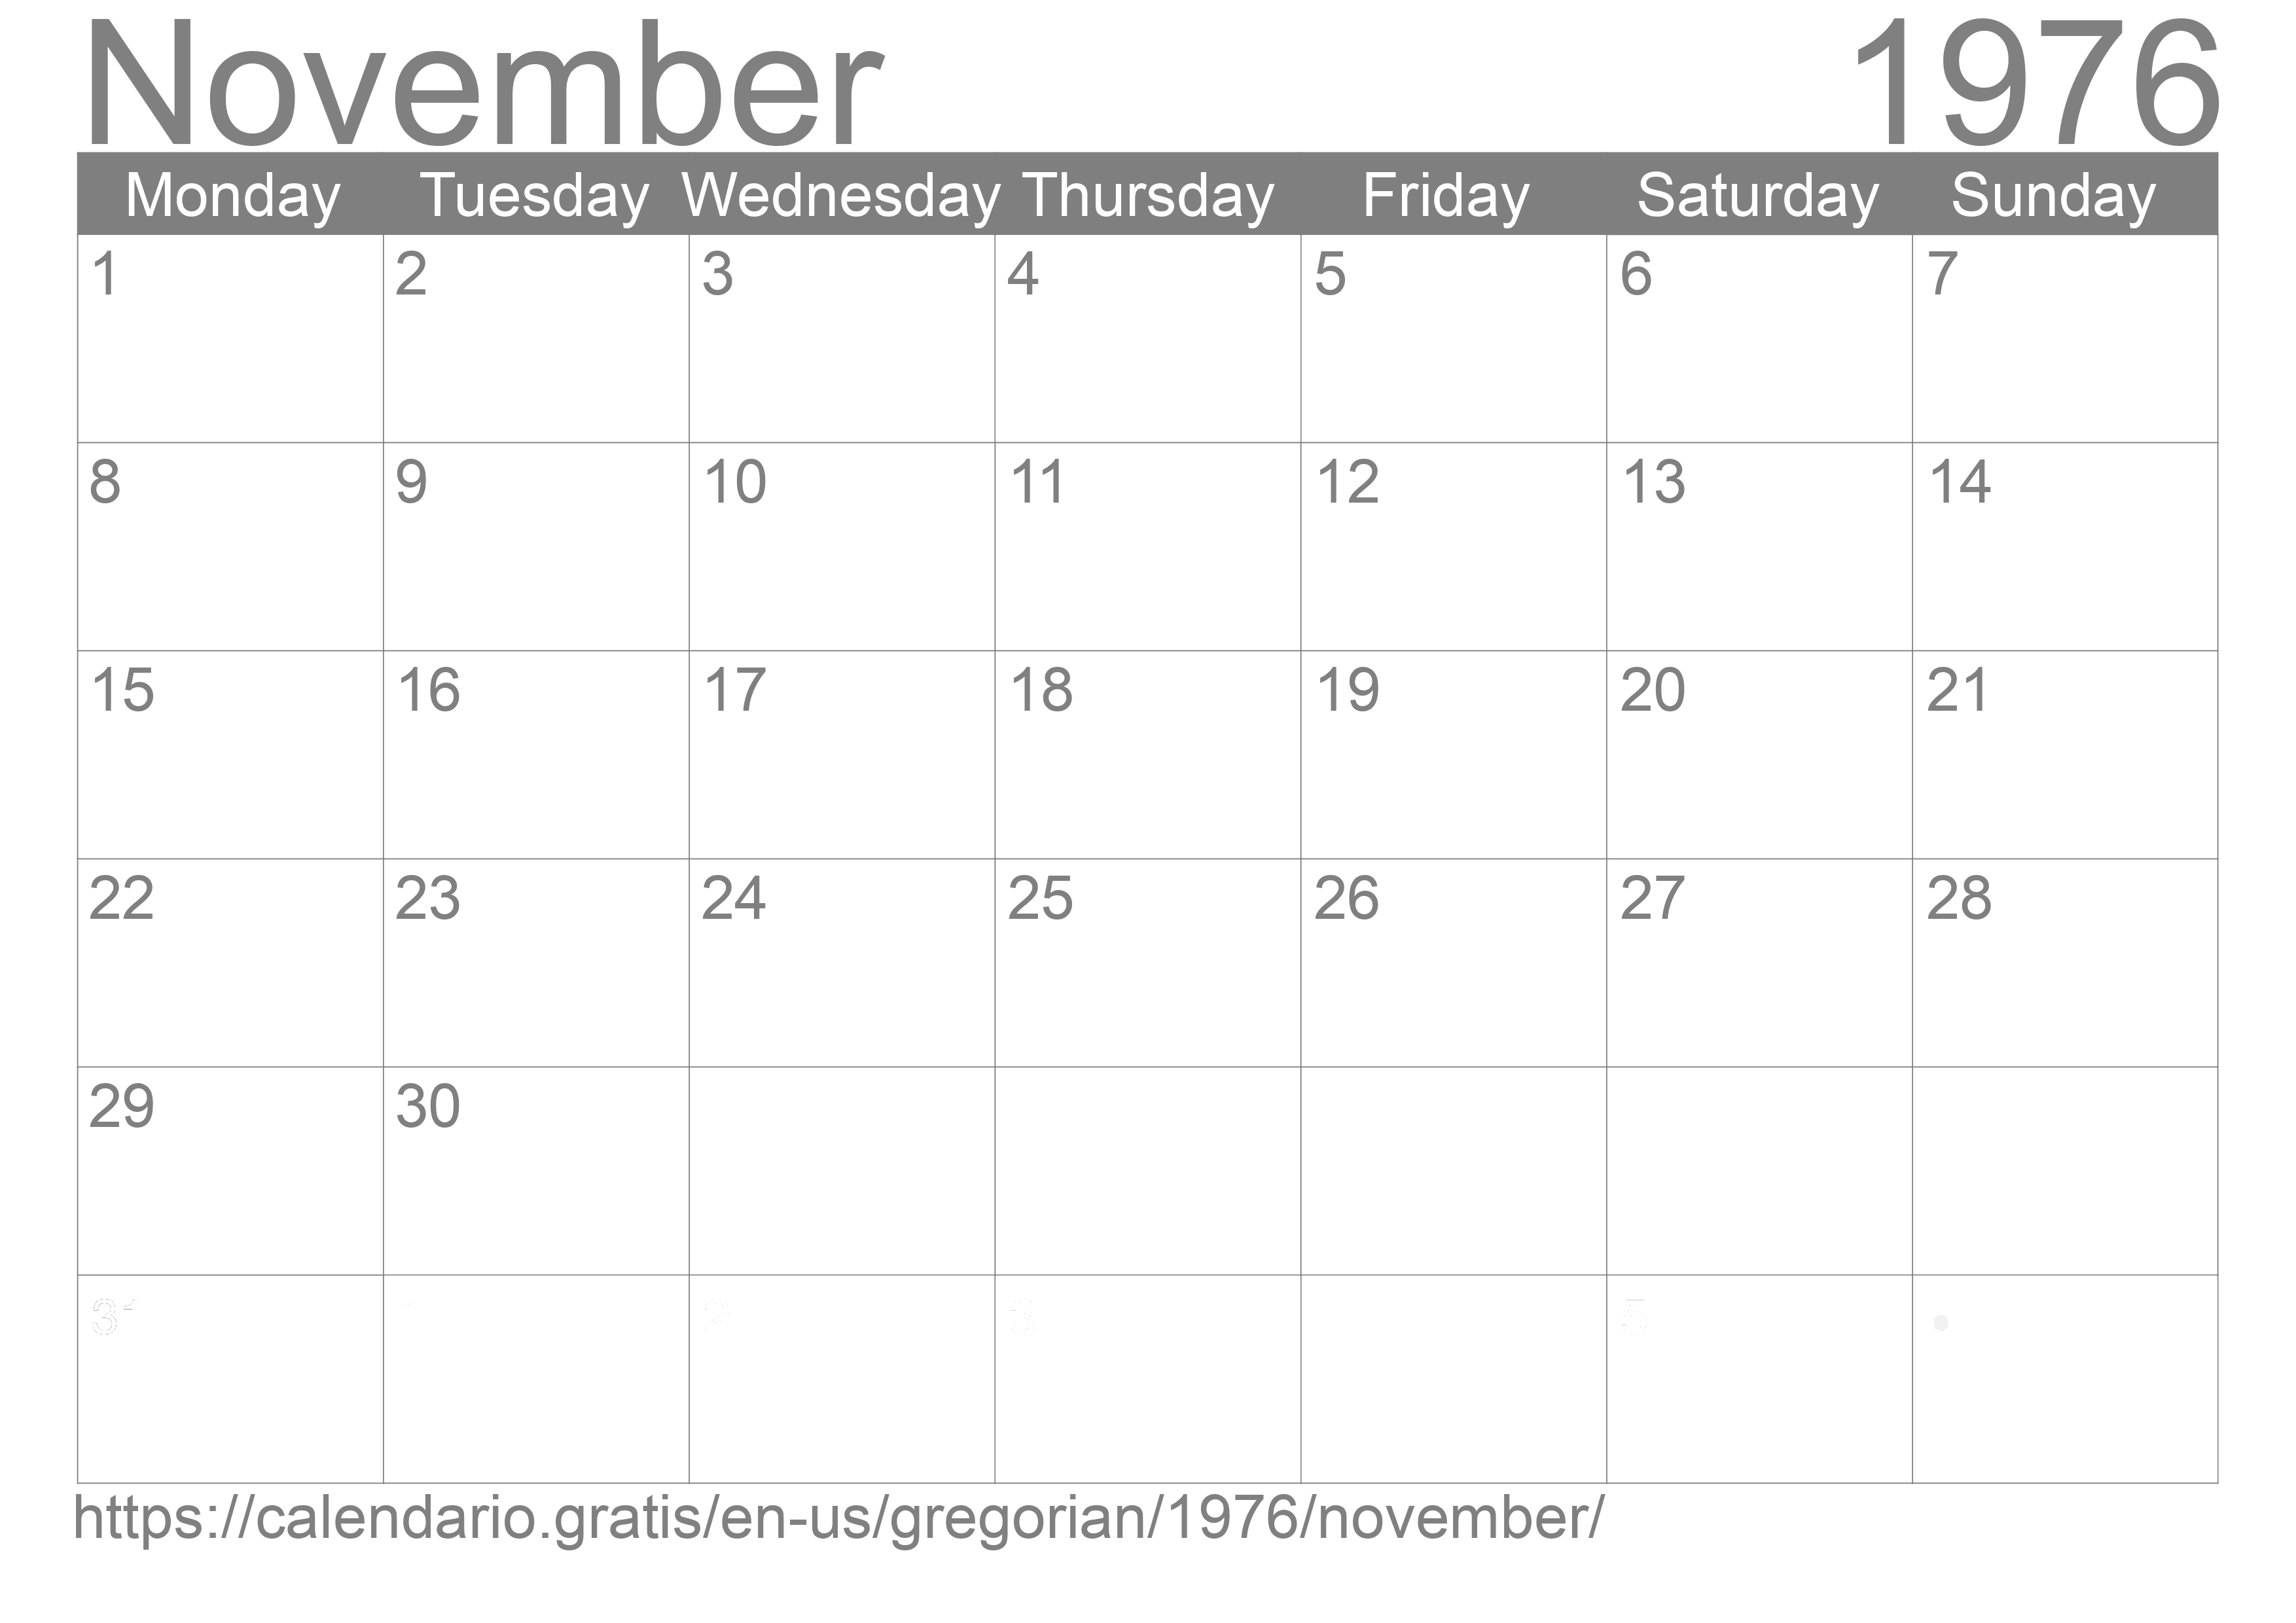 Calendar November 1976 to print